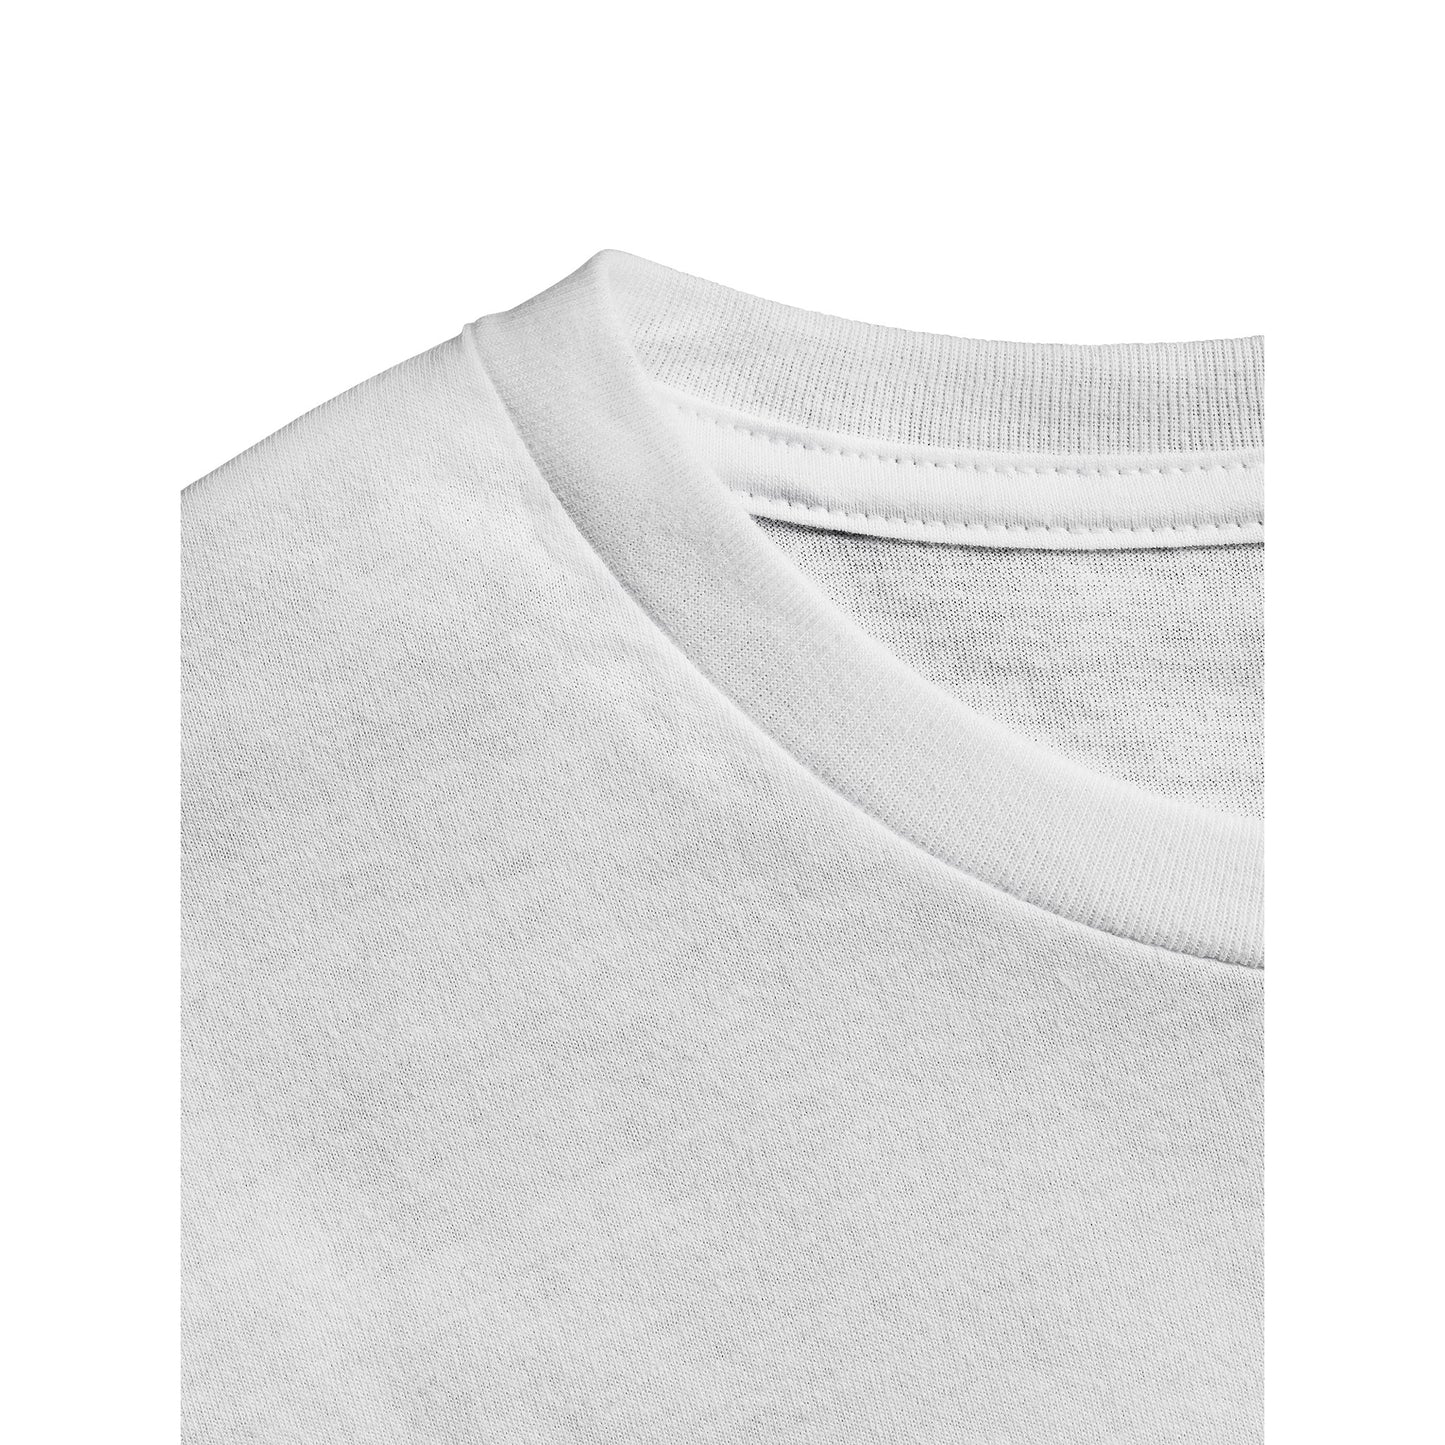 Alpha and Omega Long Sleeve T-shirt